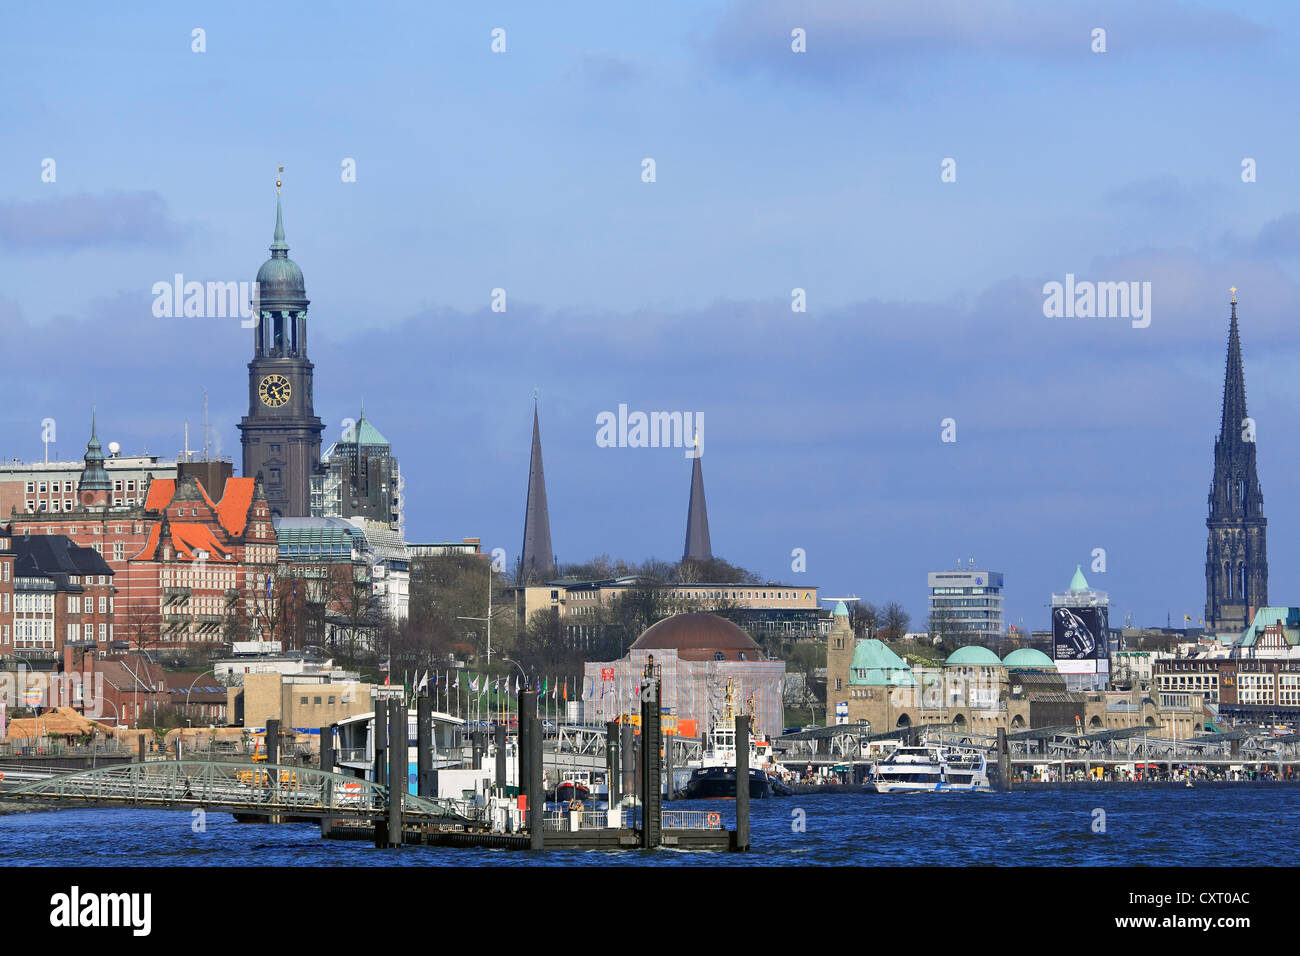 Cityscape, St. Pauli district, Elbe river, Hamburg, Germany, Europe Stock Photo